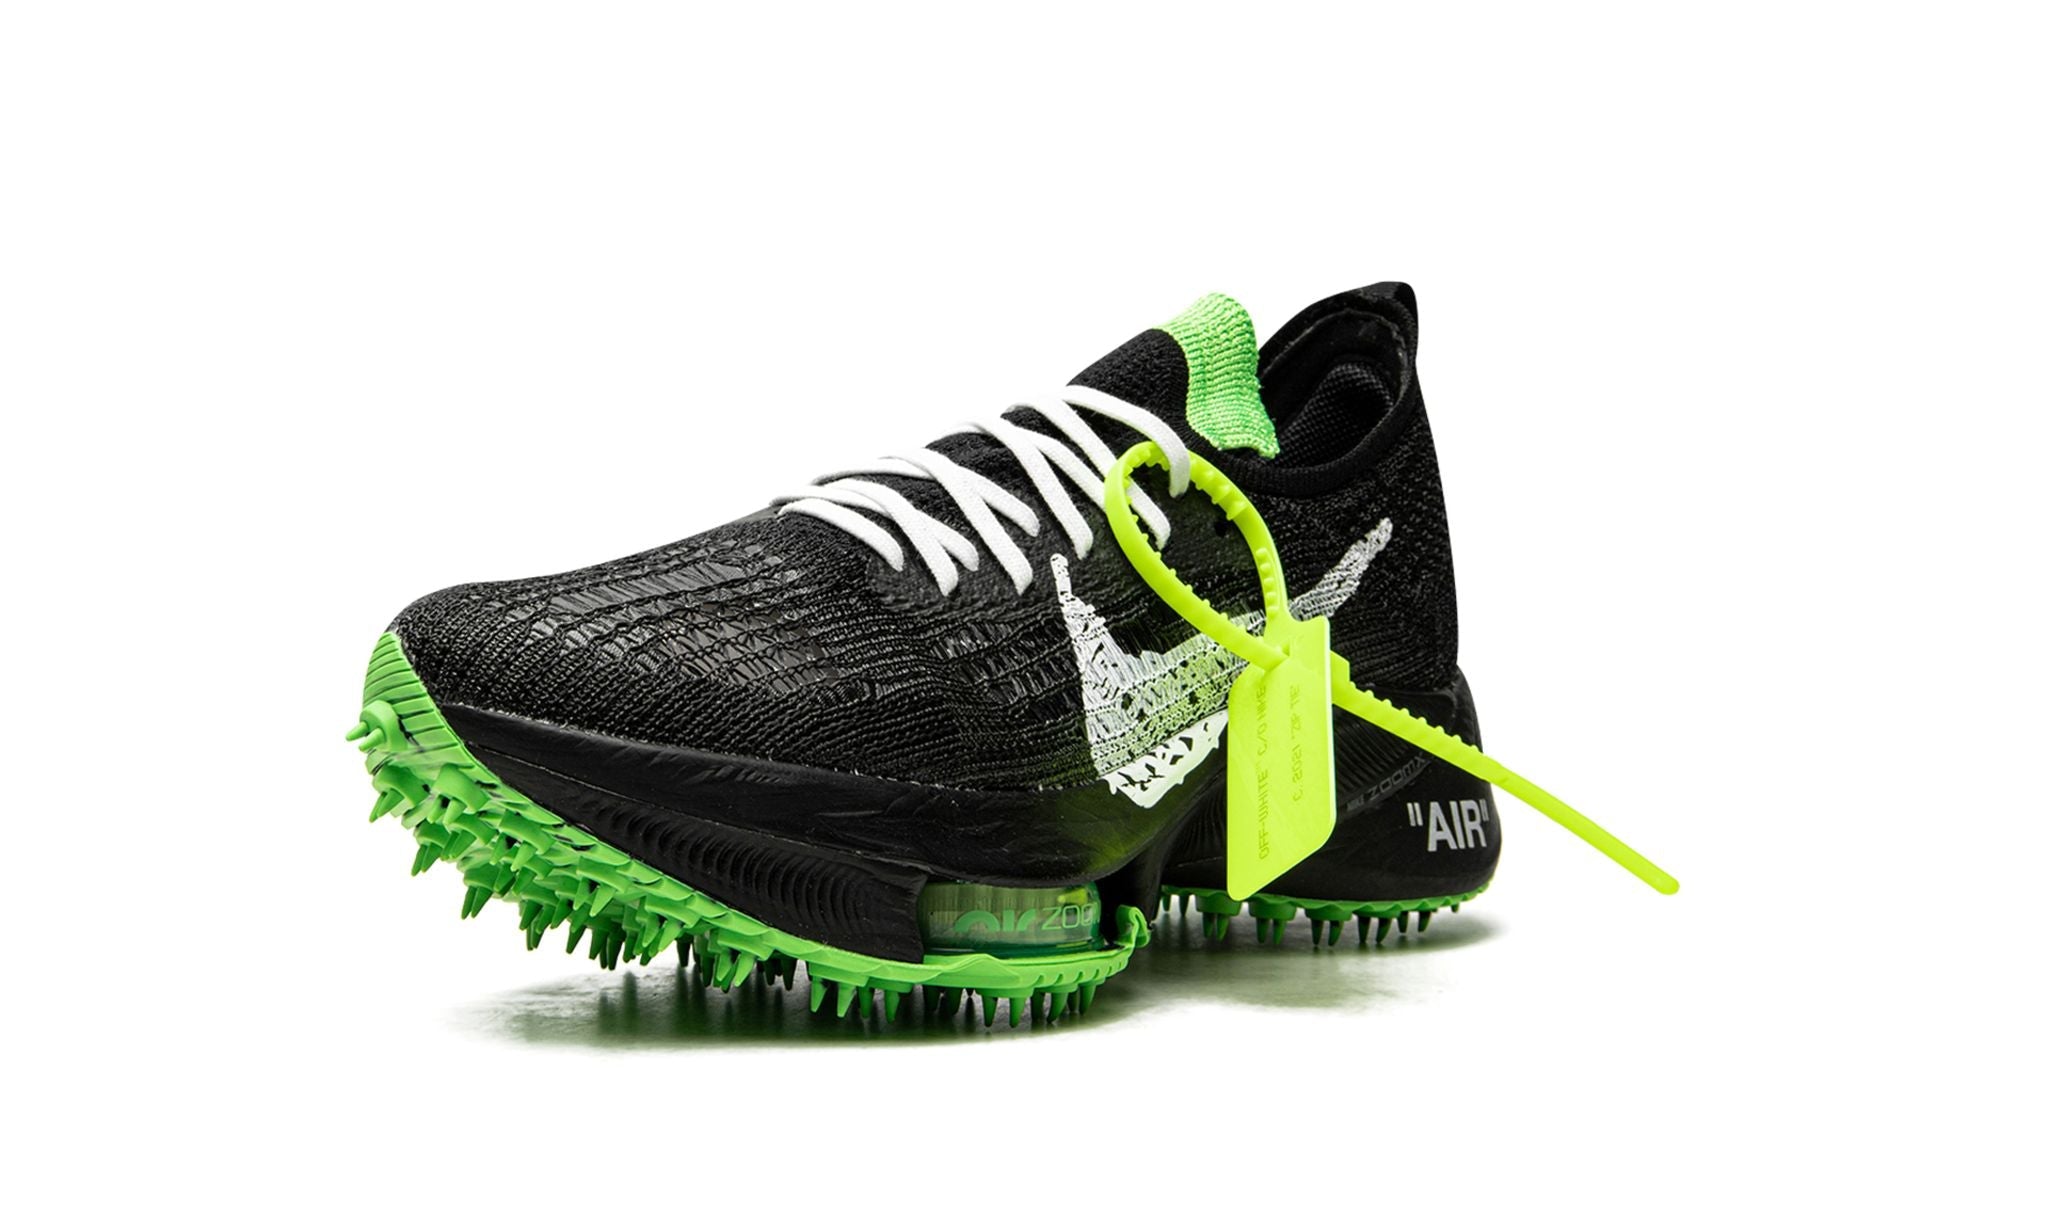 Nike Air Zoom Tempo Next% Flyknit Off-White Black Scream Green - Air Max - Pirri